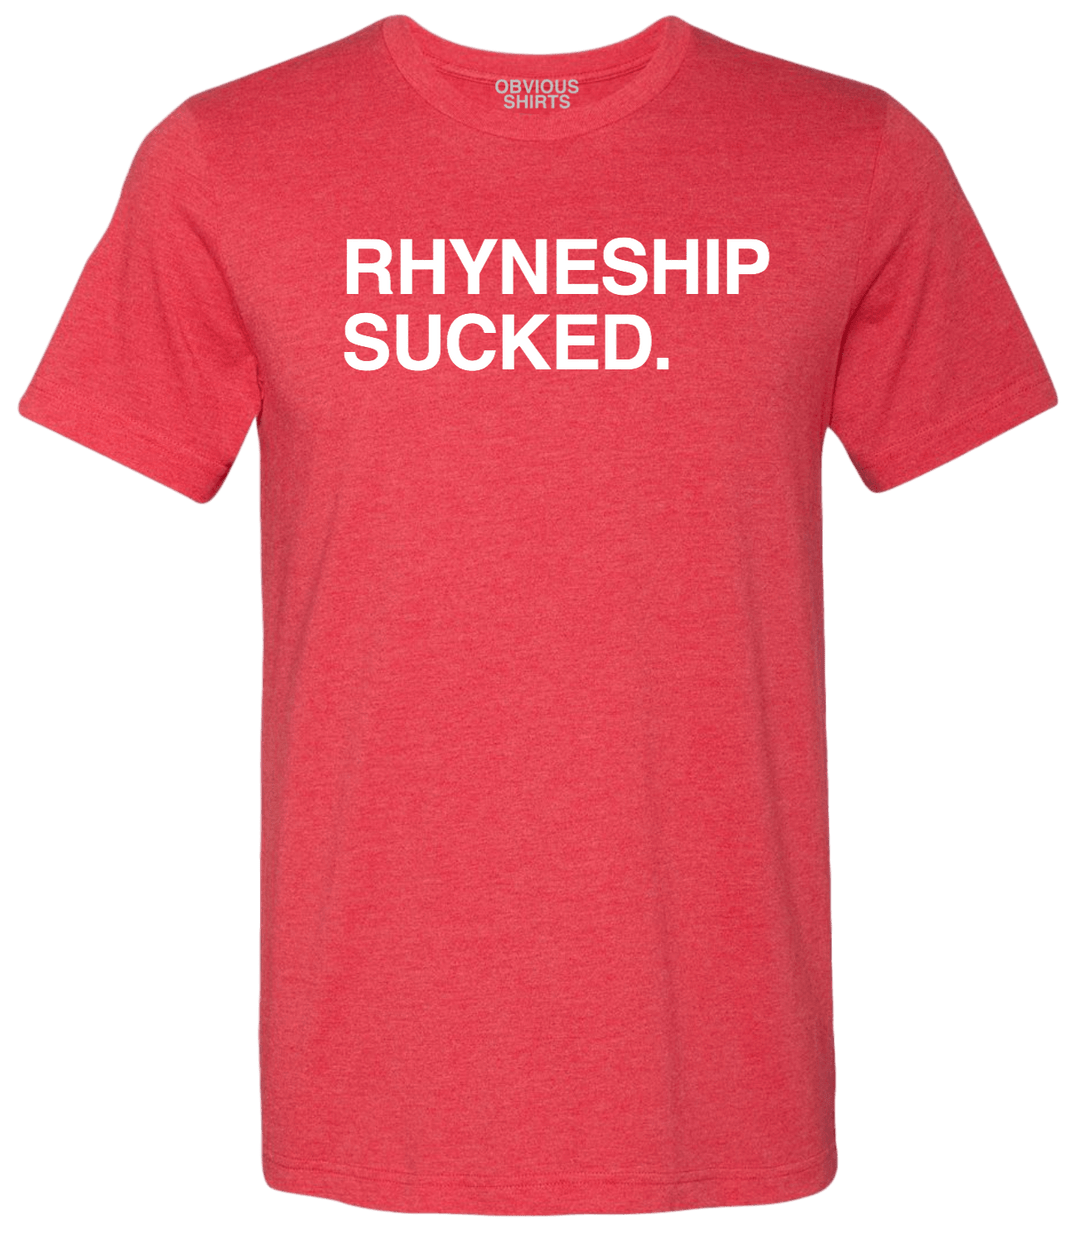 RHYNESHIP SUCKED. - OBVIOUS SHIRTS.